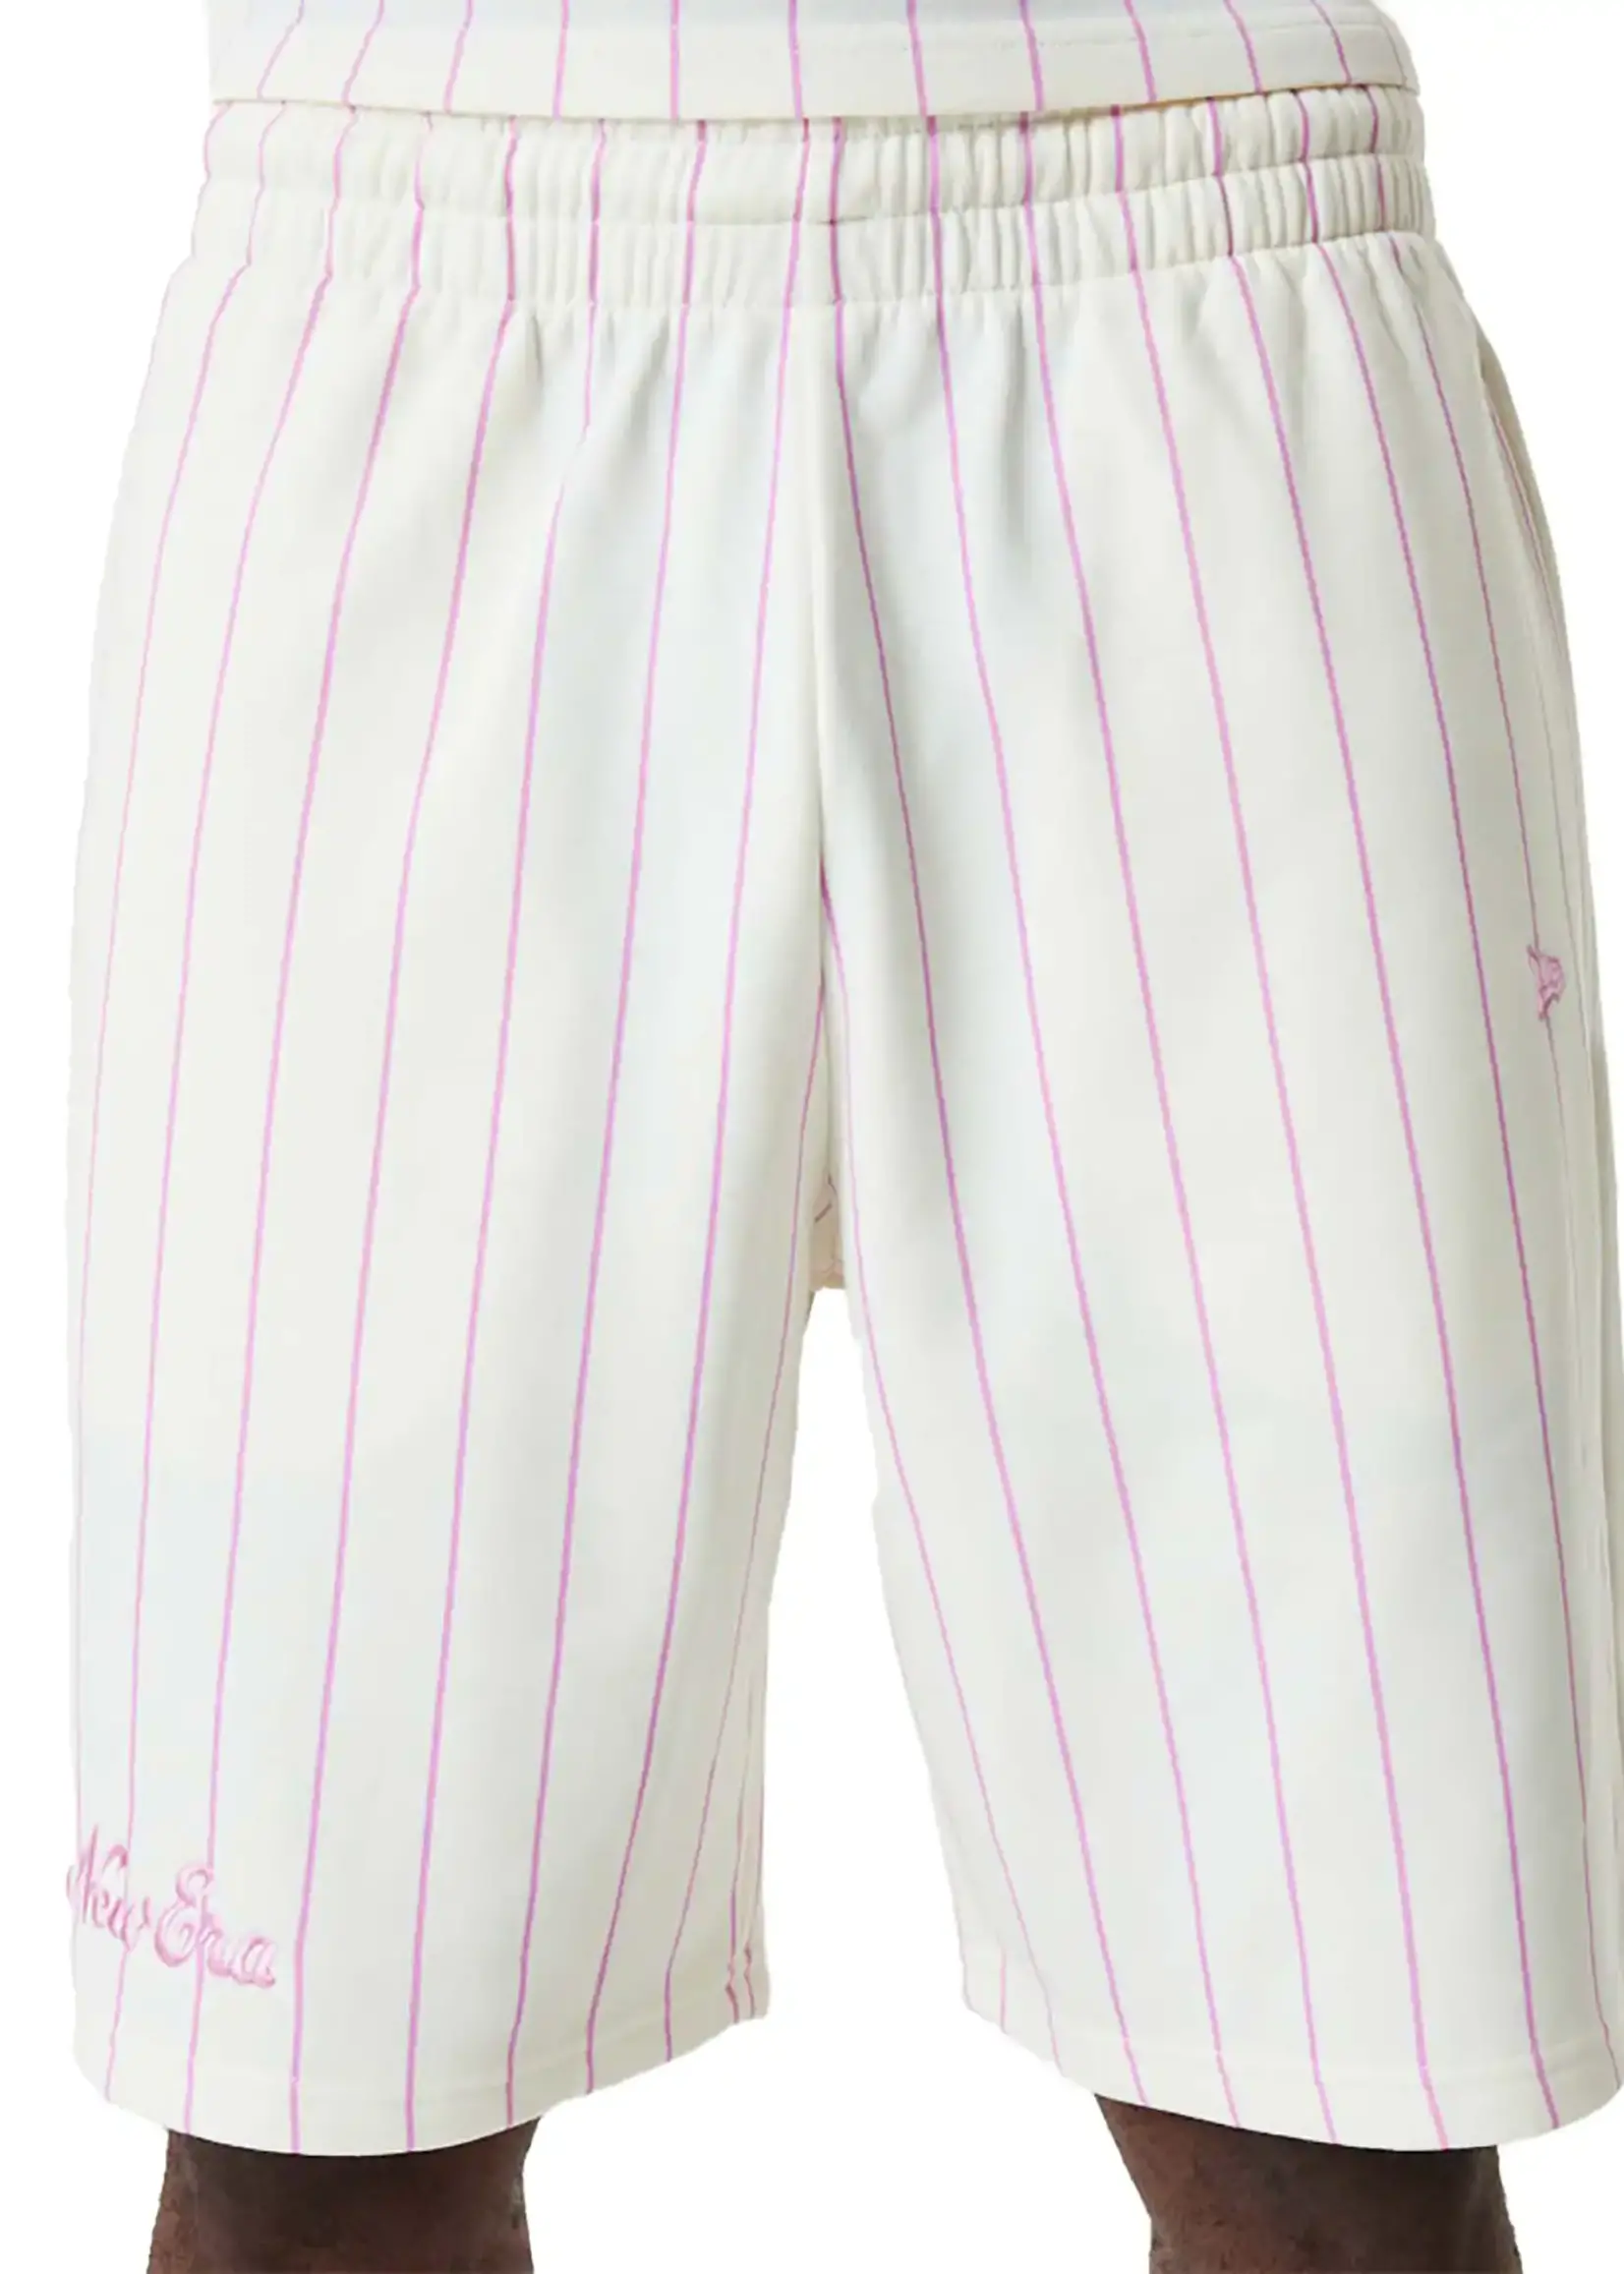 New Era Pinstripe White Pink Shorts